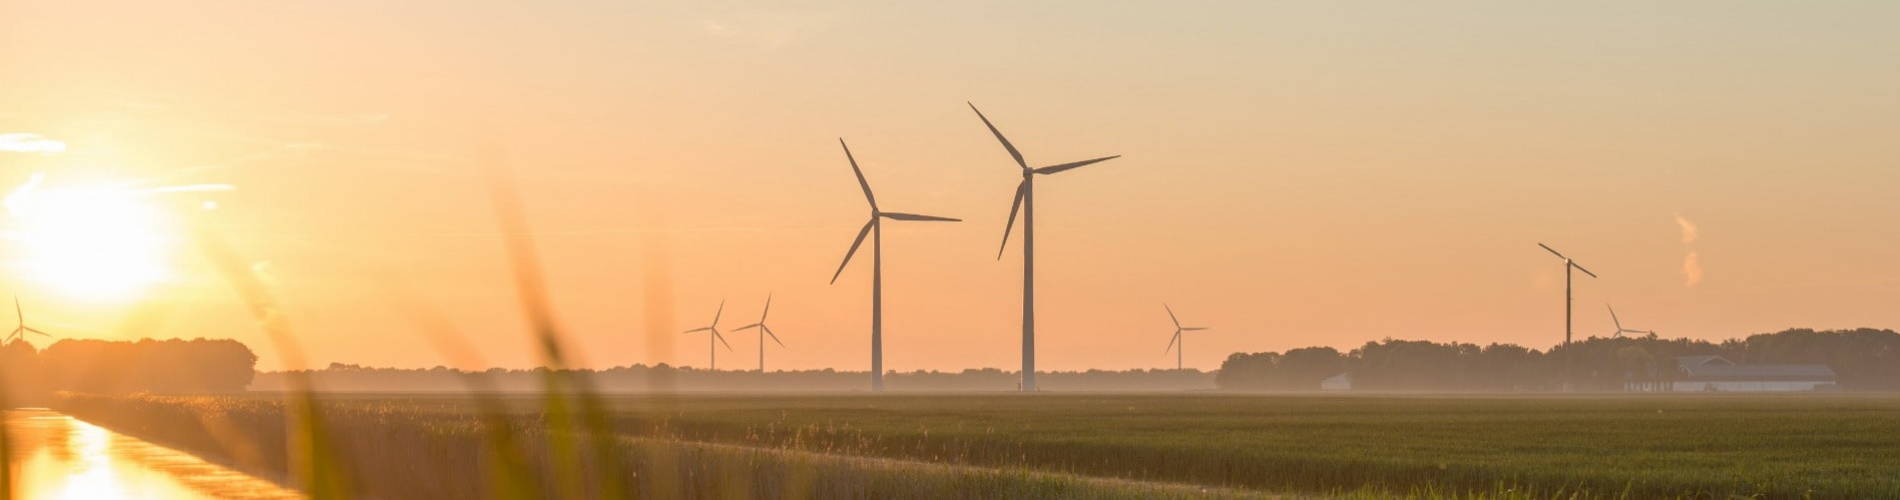 renewable-energy-wind-turbine